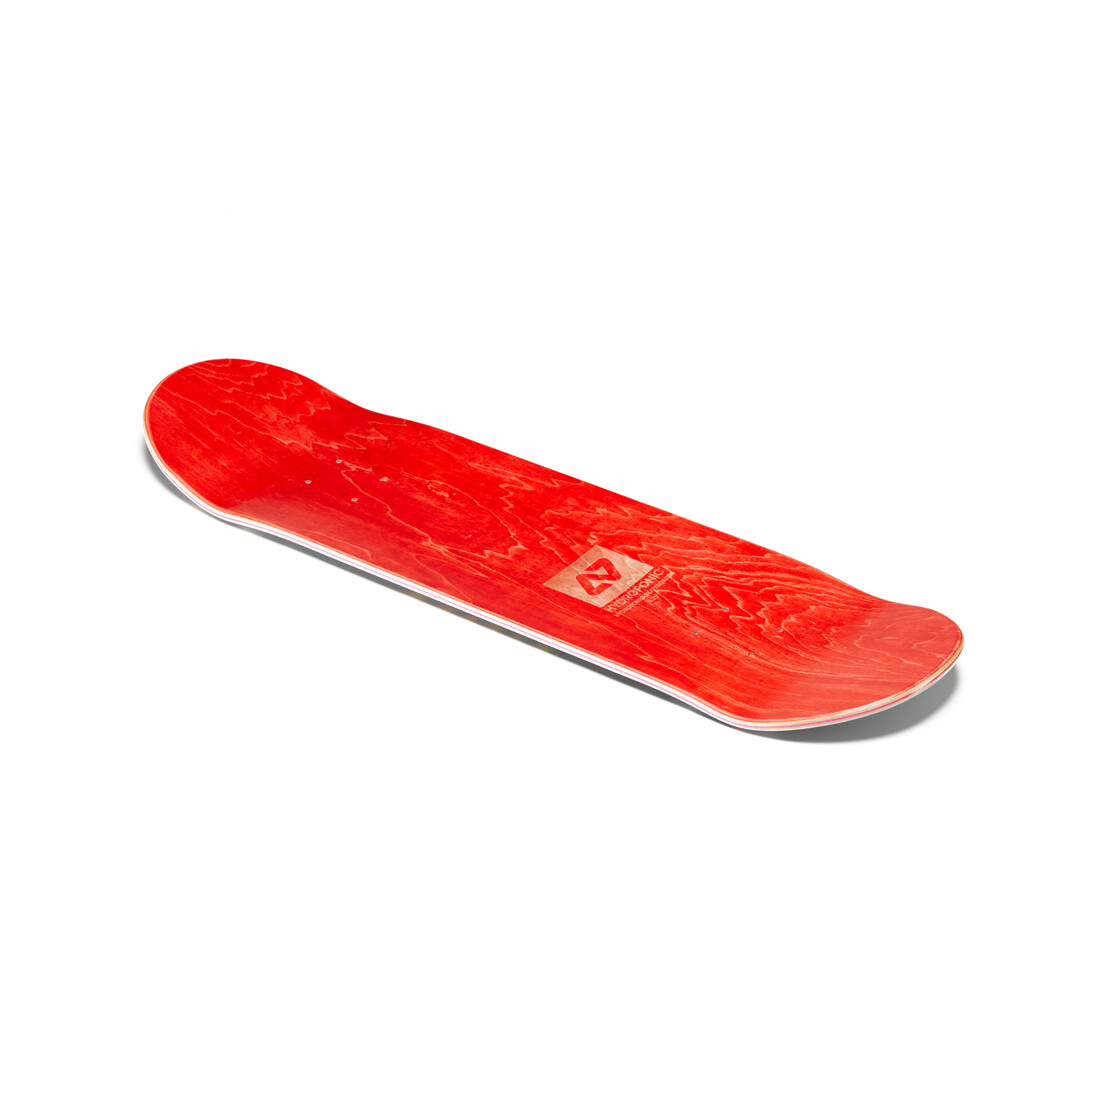 Hydroponic South Park Kyle 8.25" skateboard deck